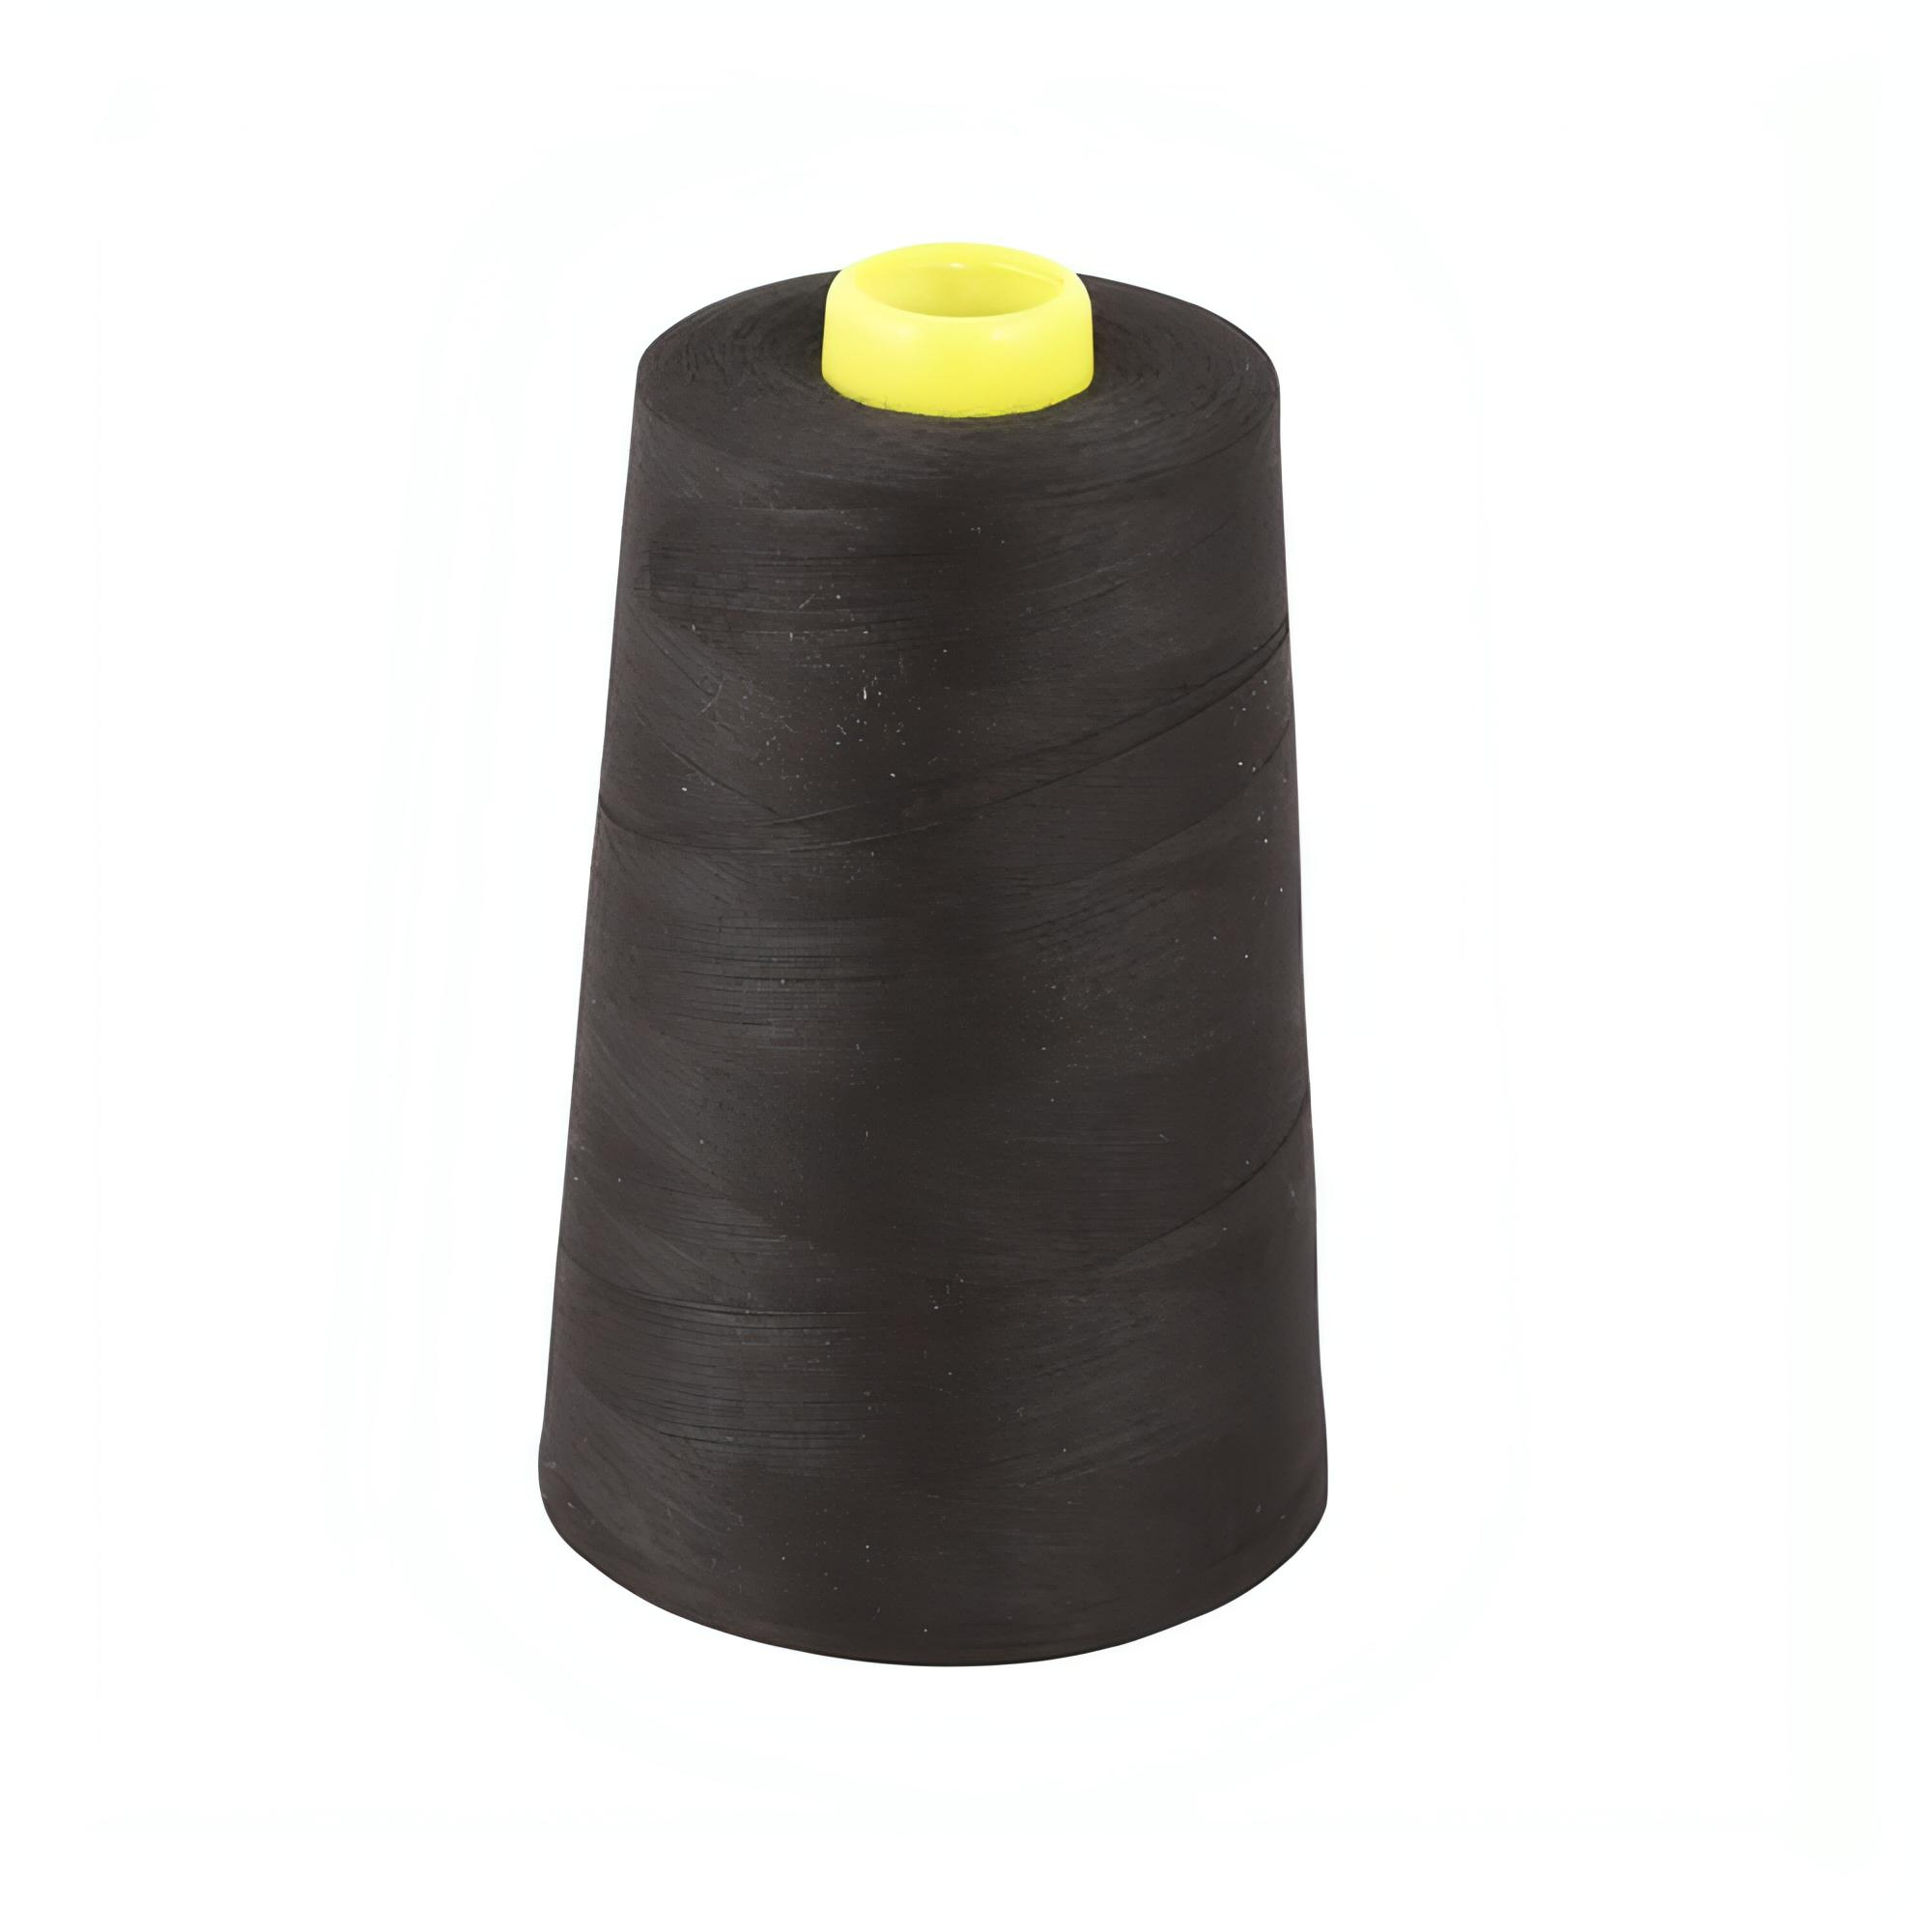 Overlocker Thread Cone 5000m Extra Large - Black - Designed for Overlockers